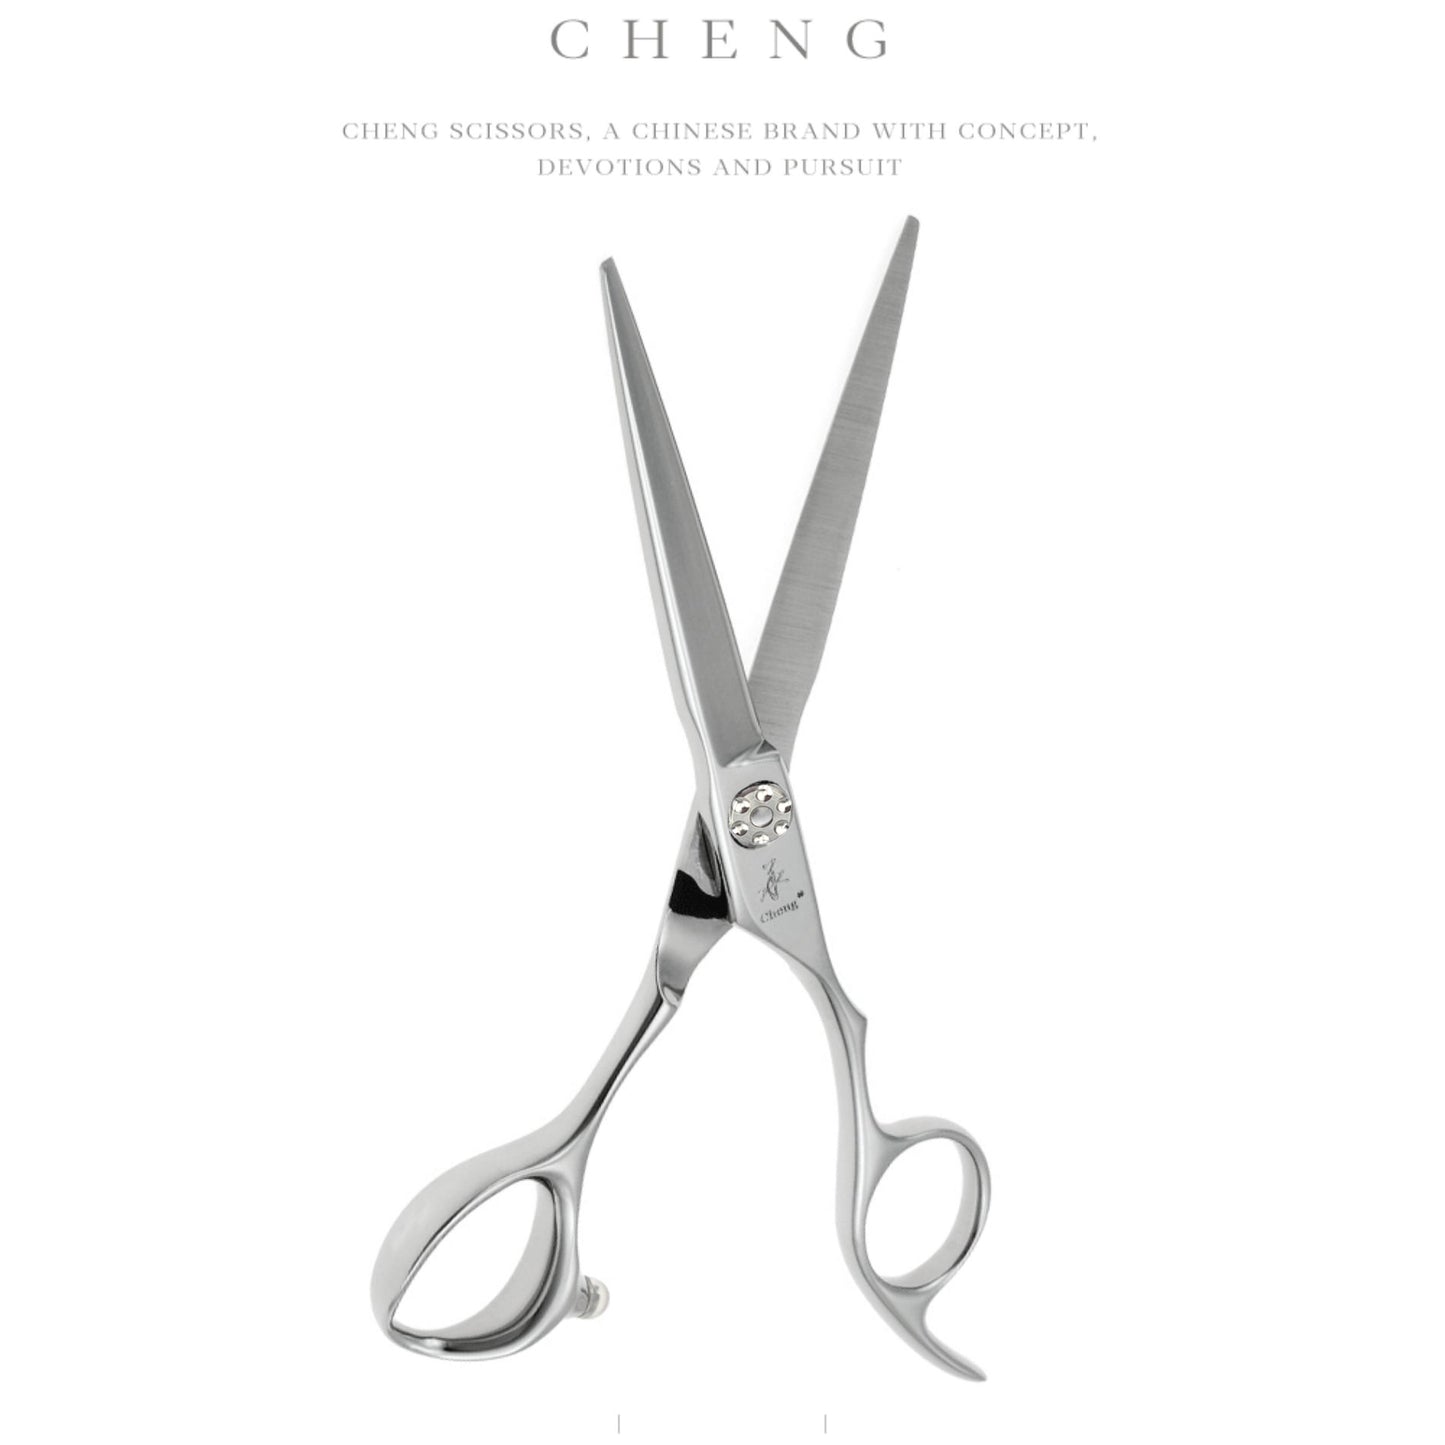 CUC-625N Hair Cutting Scissors Professional Hairdressing Shear 6.25Inch